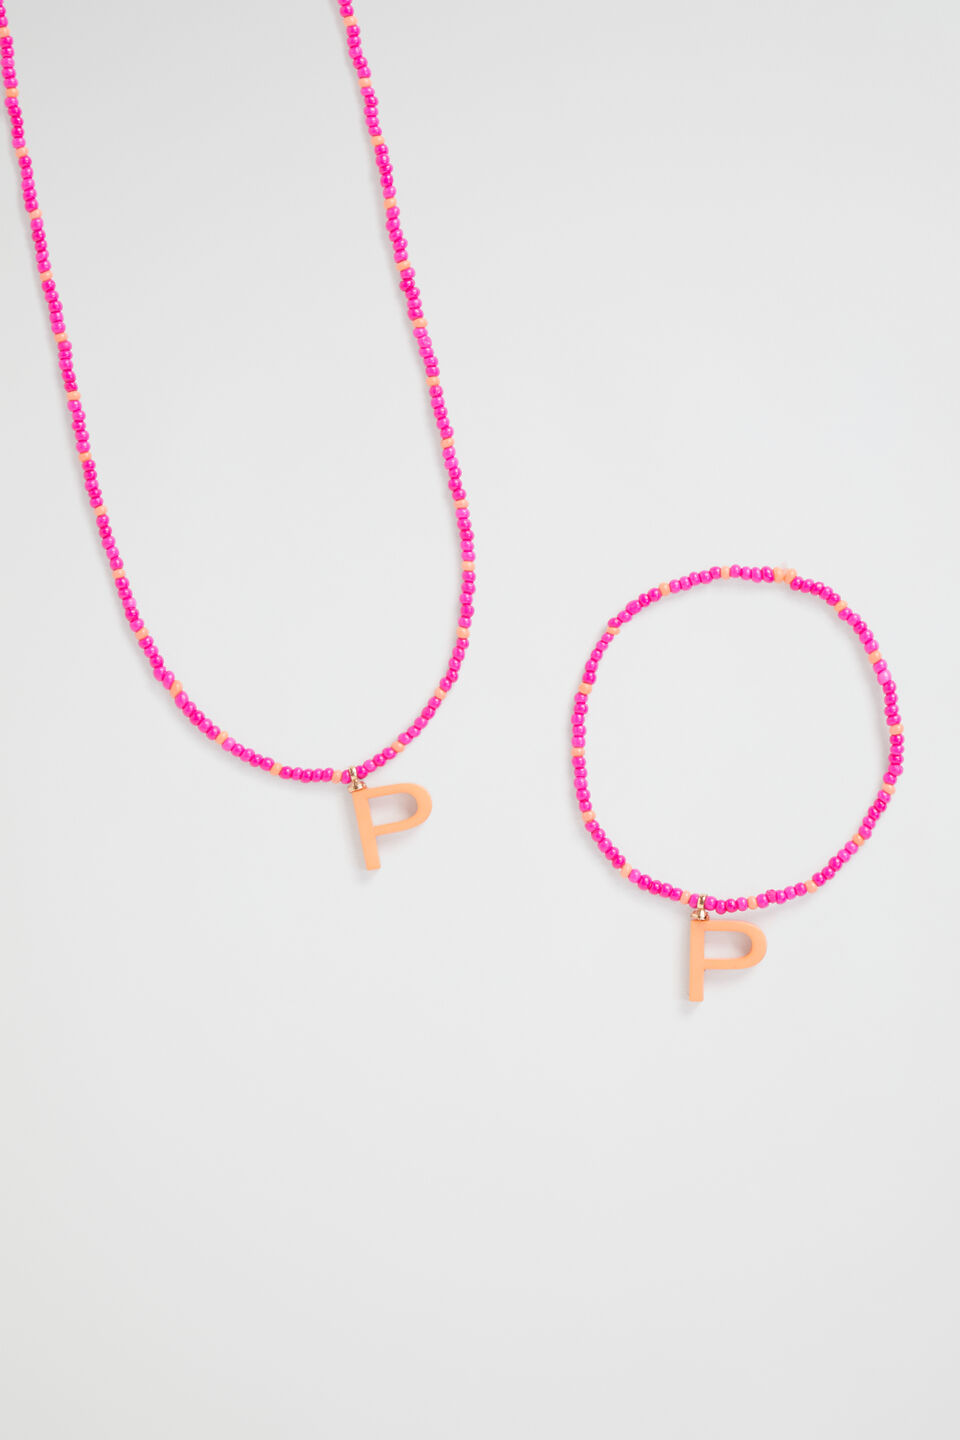 Initial Necklace and Bracelet Set  P